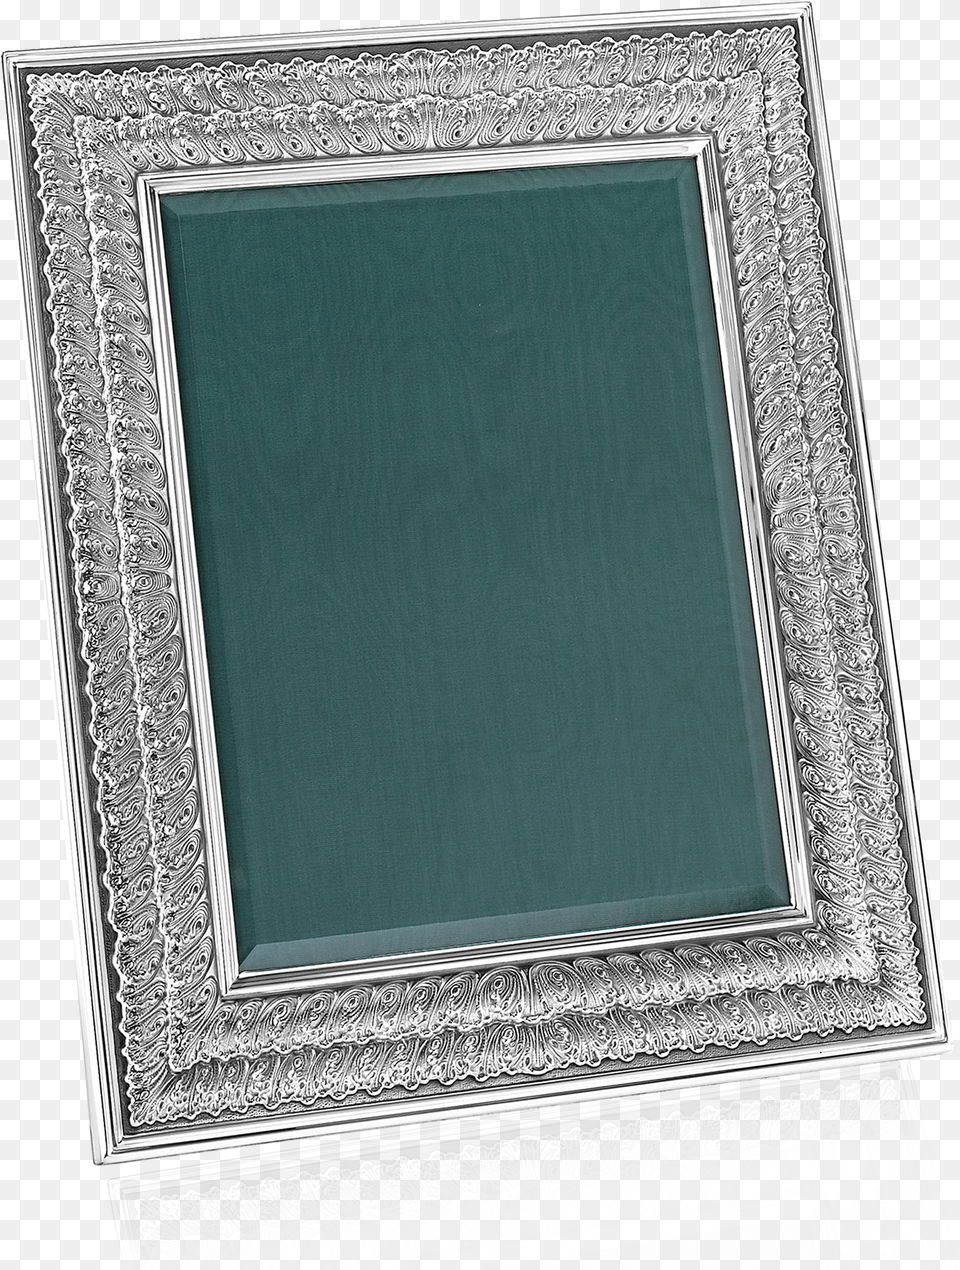 Buccellati Frames Double Linenfold Frames Picture Frame, Blackboard, Mirror Free Png Download